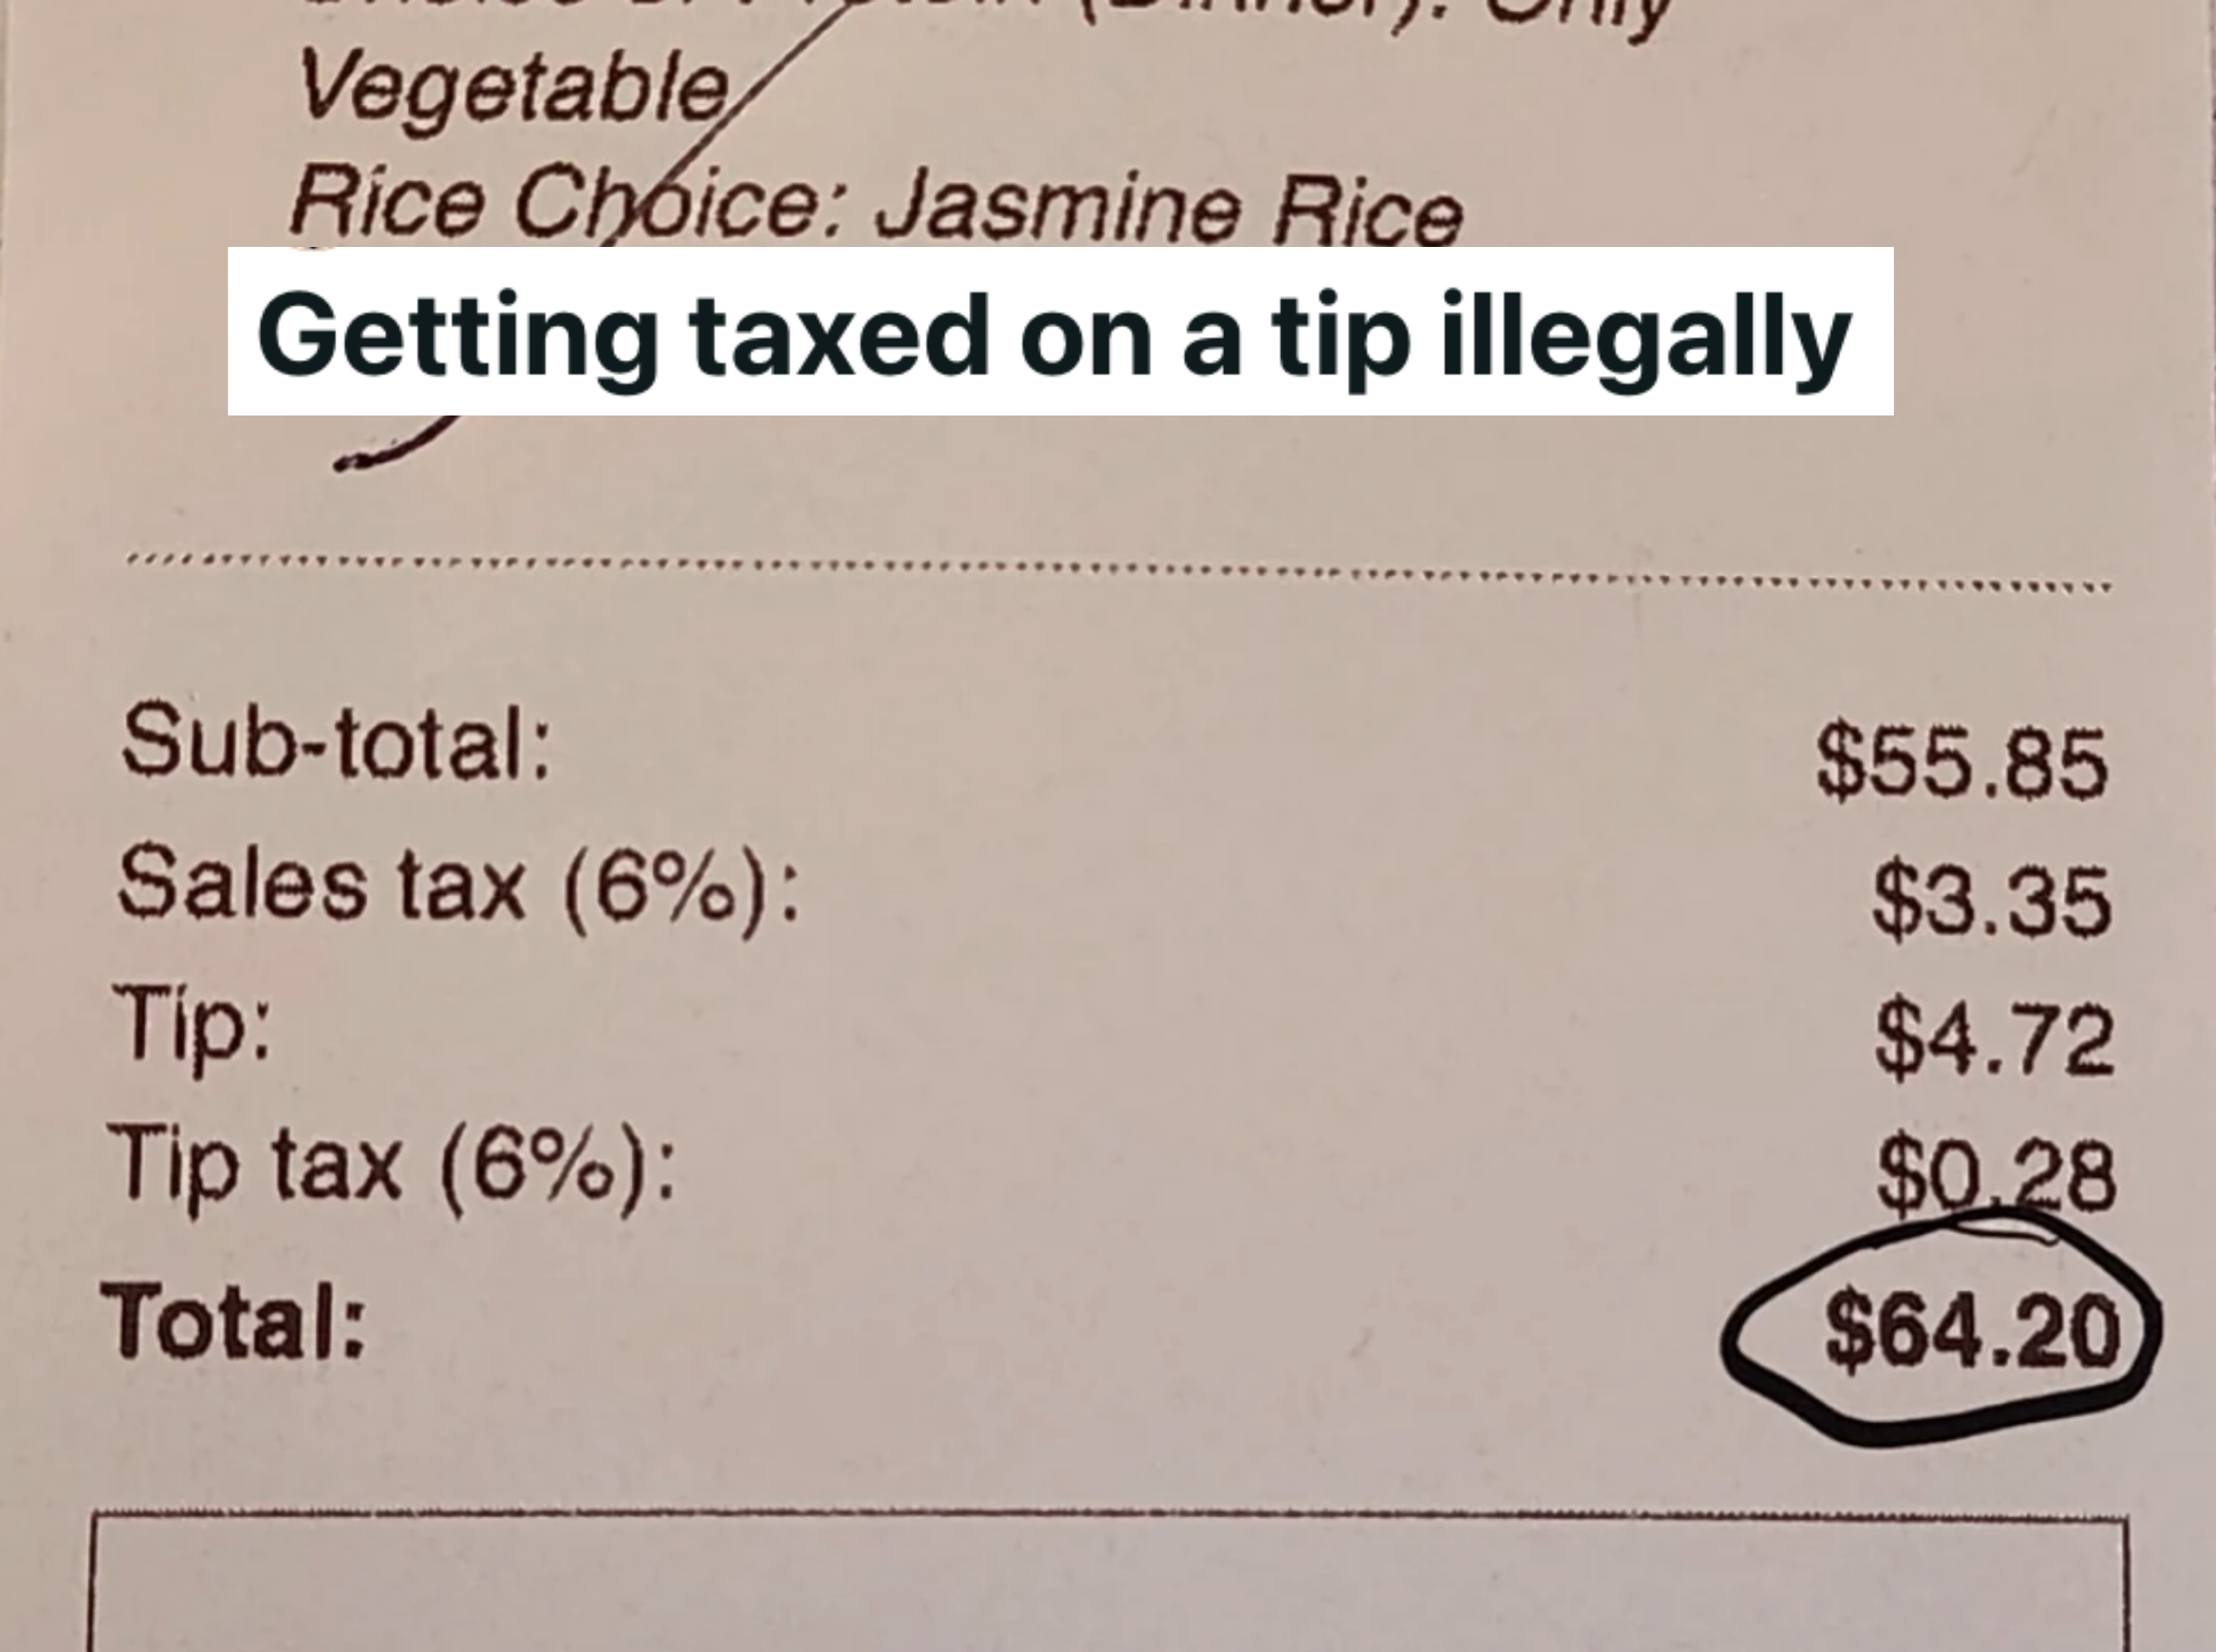 line item has a 6% tip tax